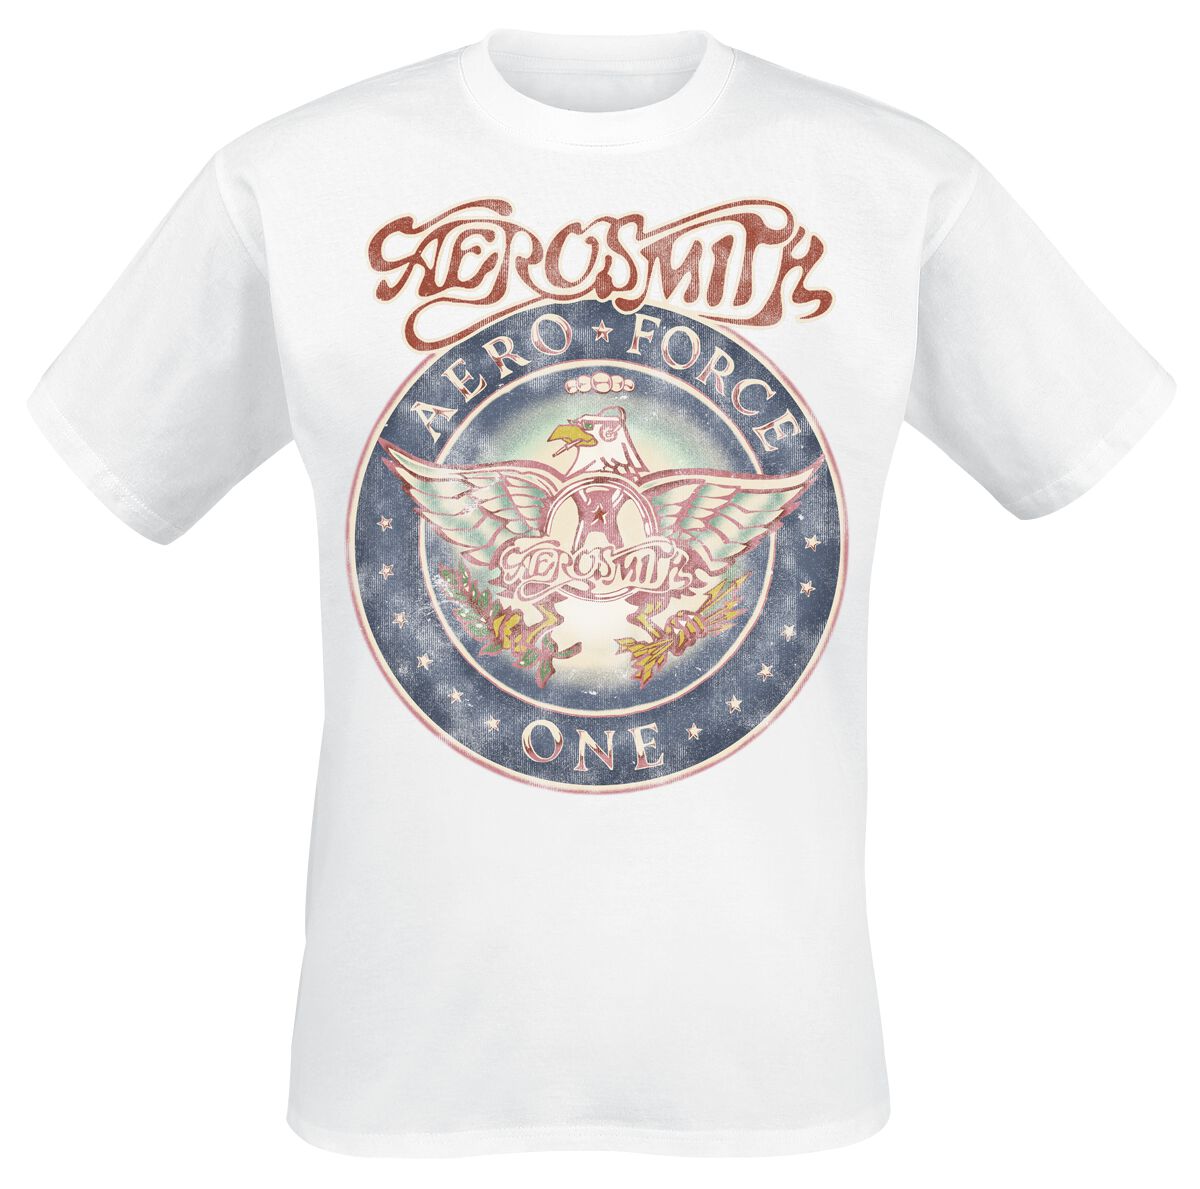 Aerosmith Aero Force One Seal T-Shirt white